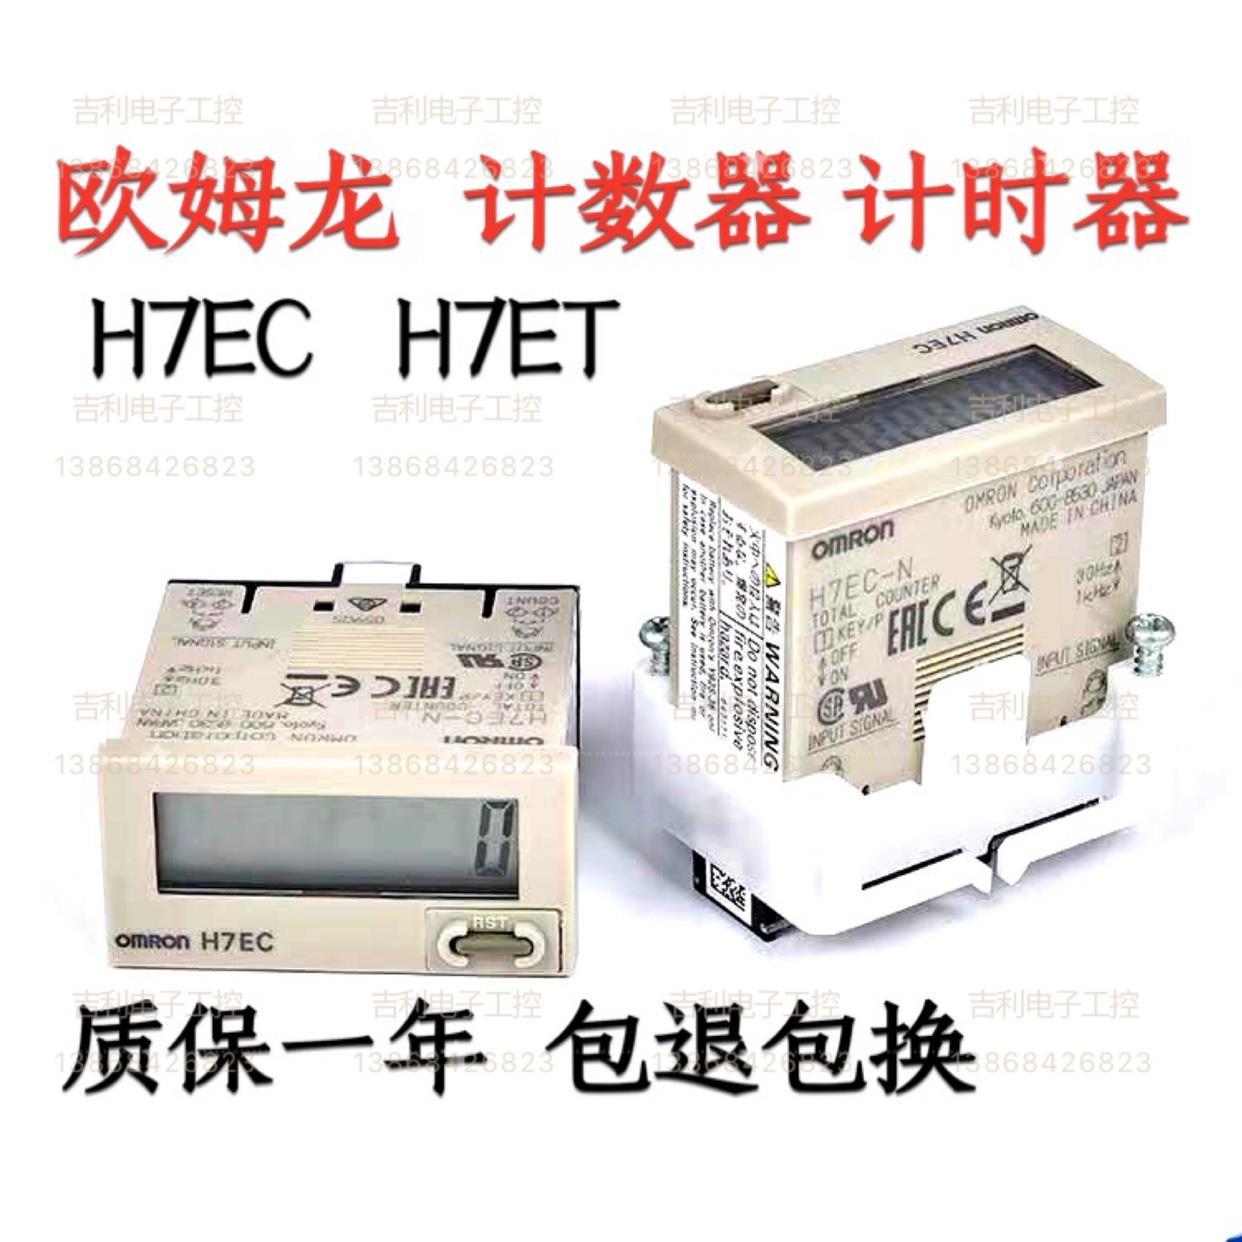 Original import OMRON H7EC-N H7ET Counter Electronic Digital display counter 86 Count